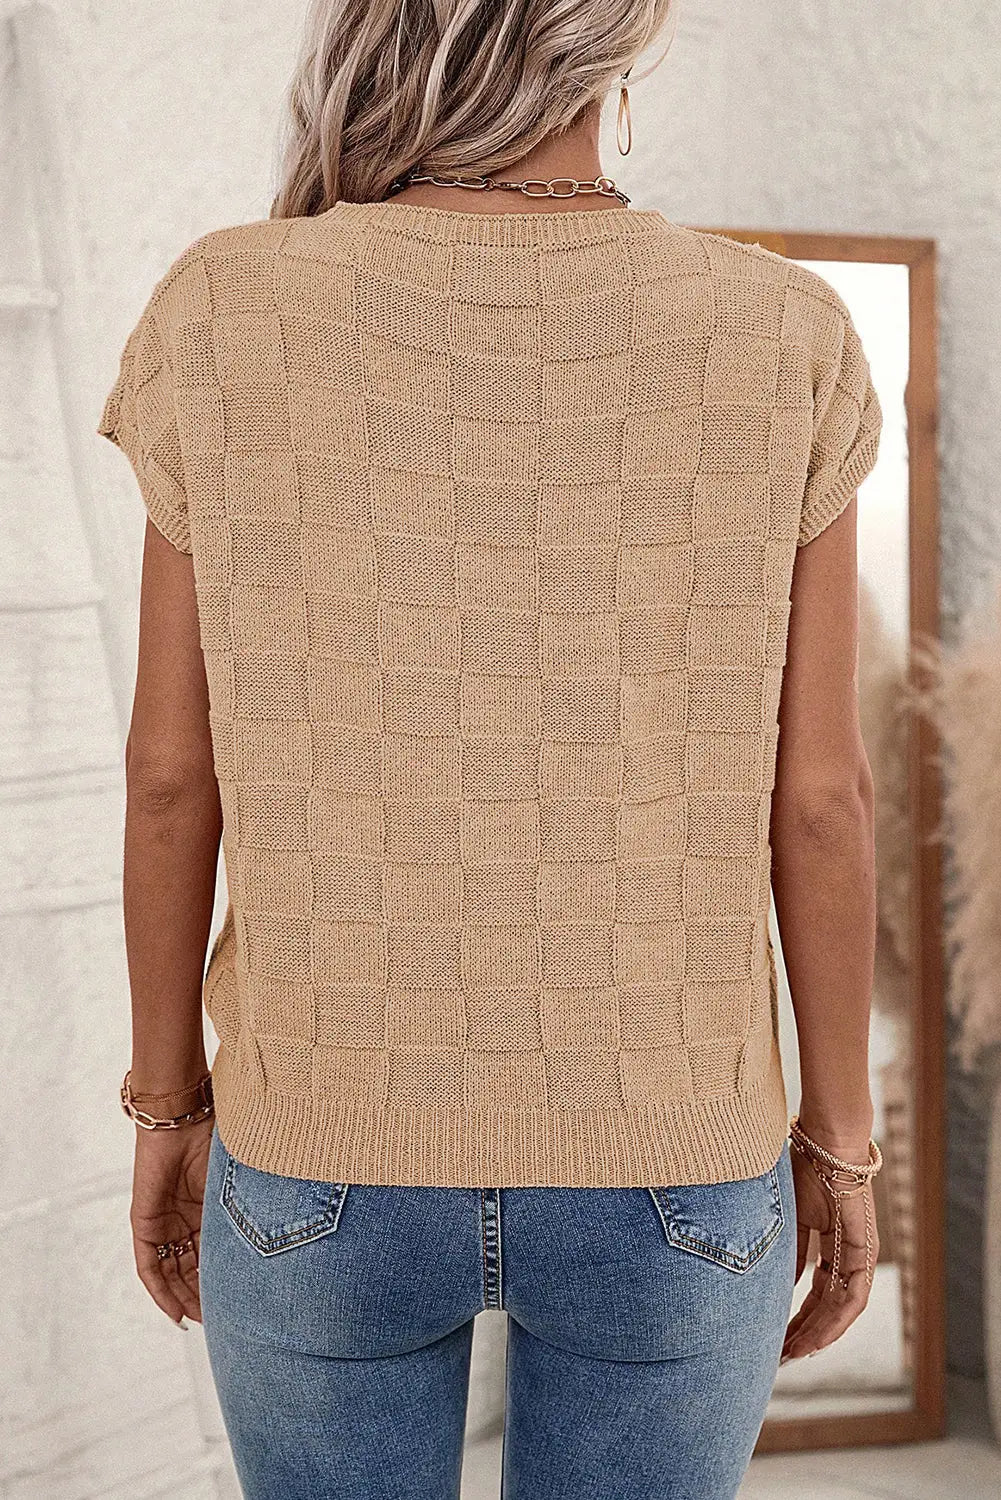 Smoke gray lattice textured knit short sleeve sweater - sweaters & cardigans